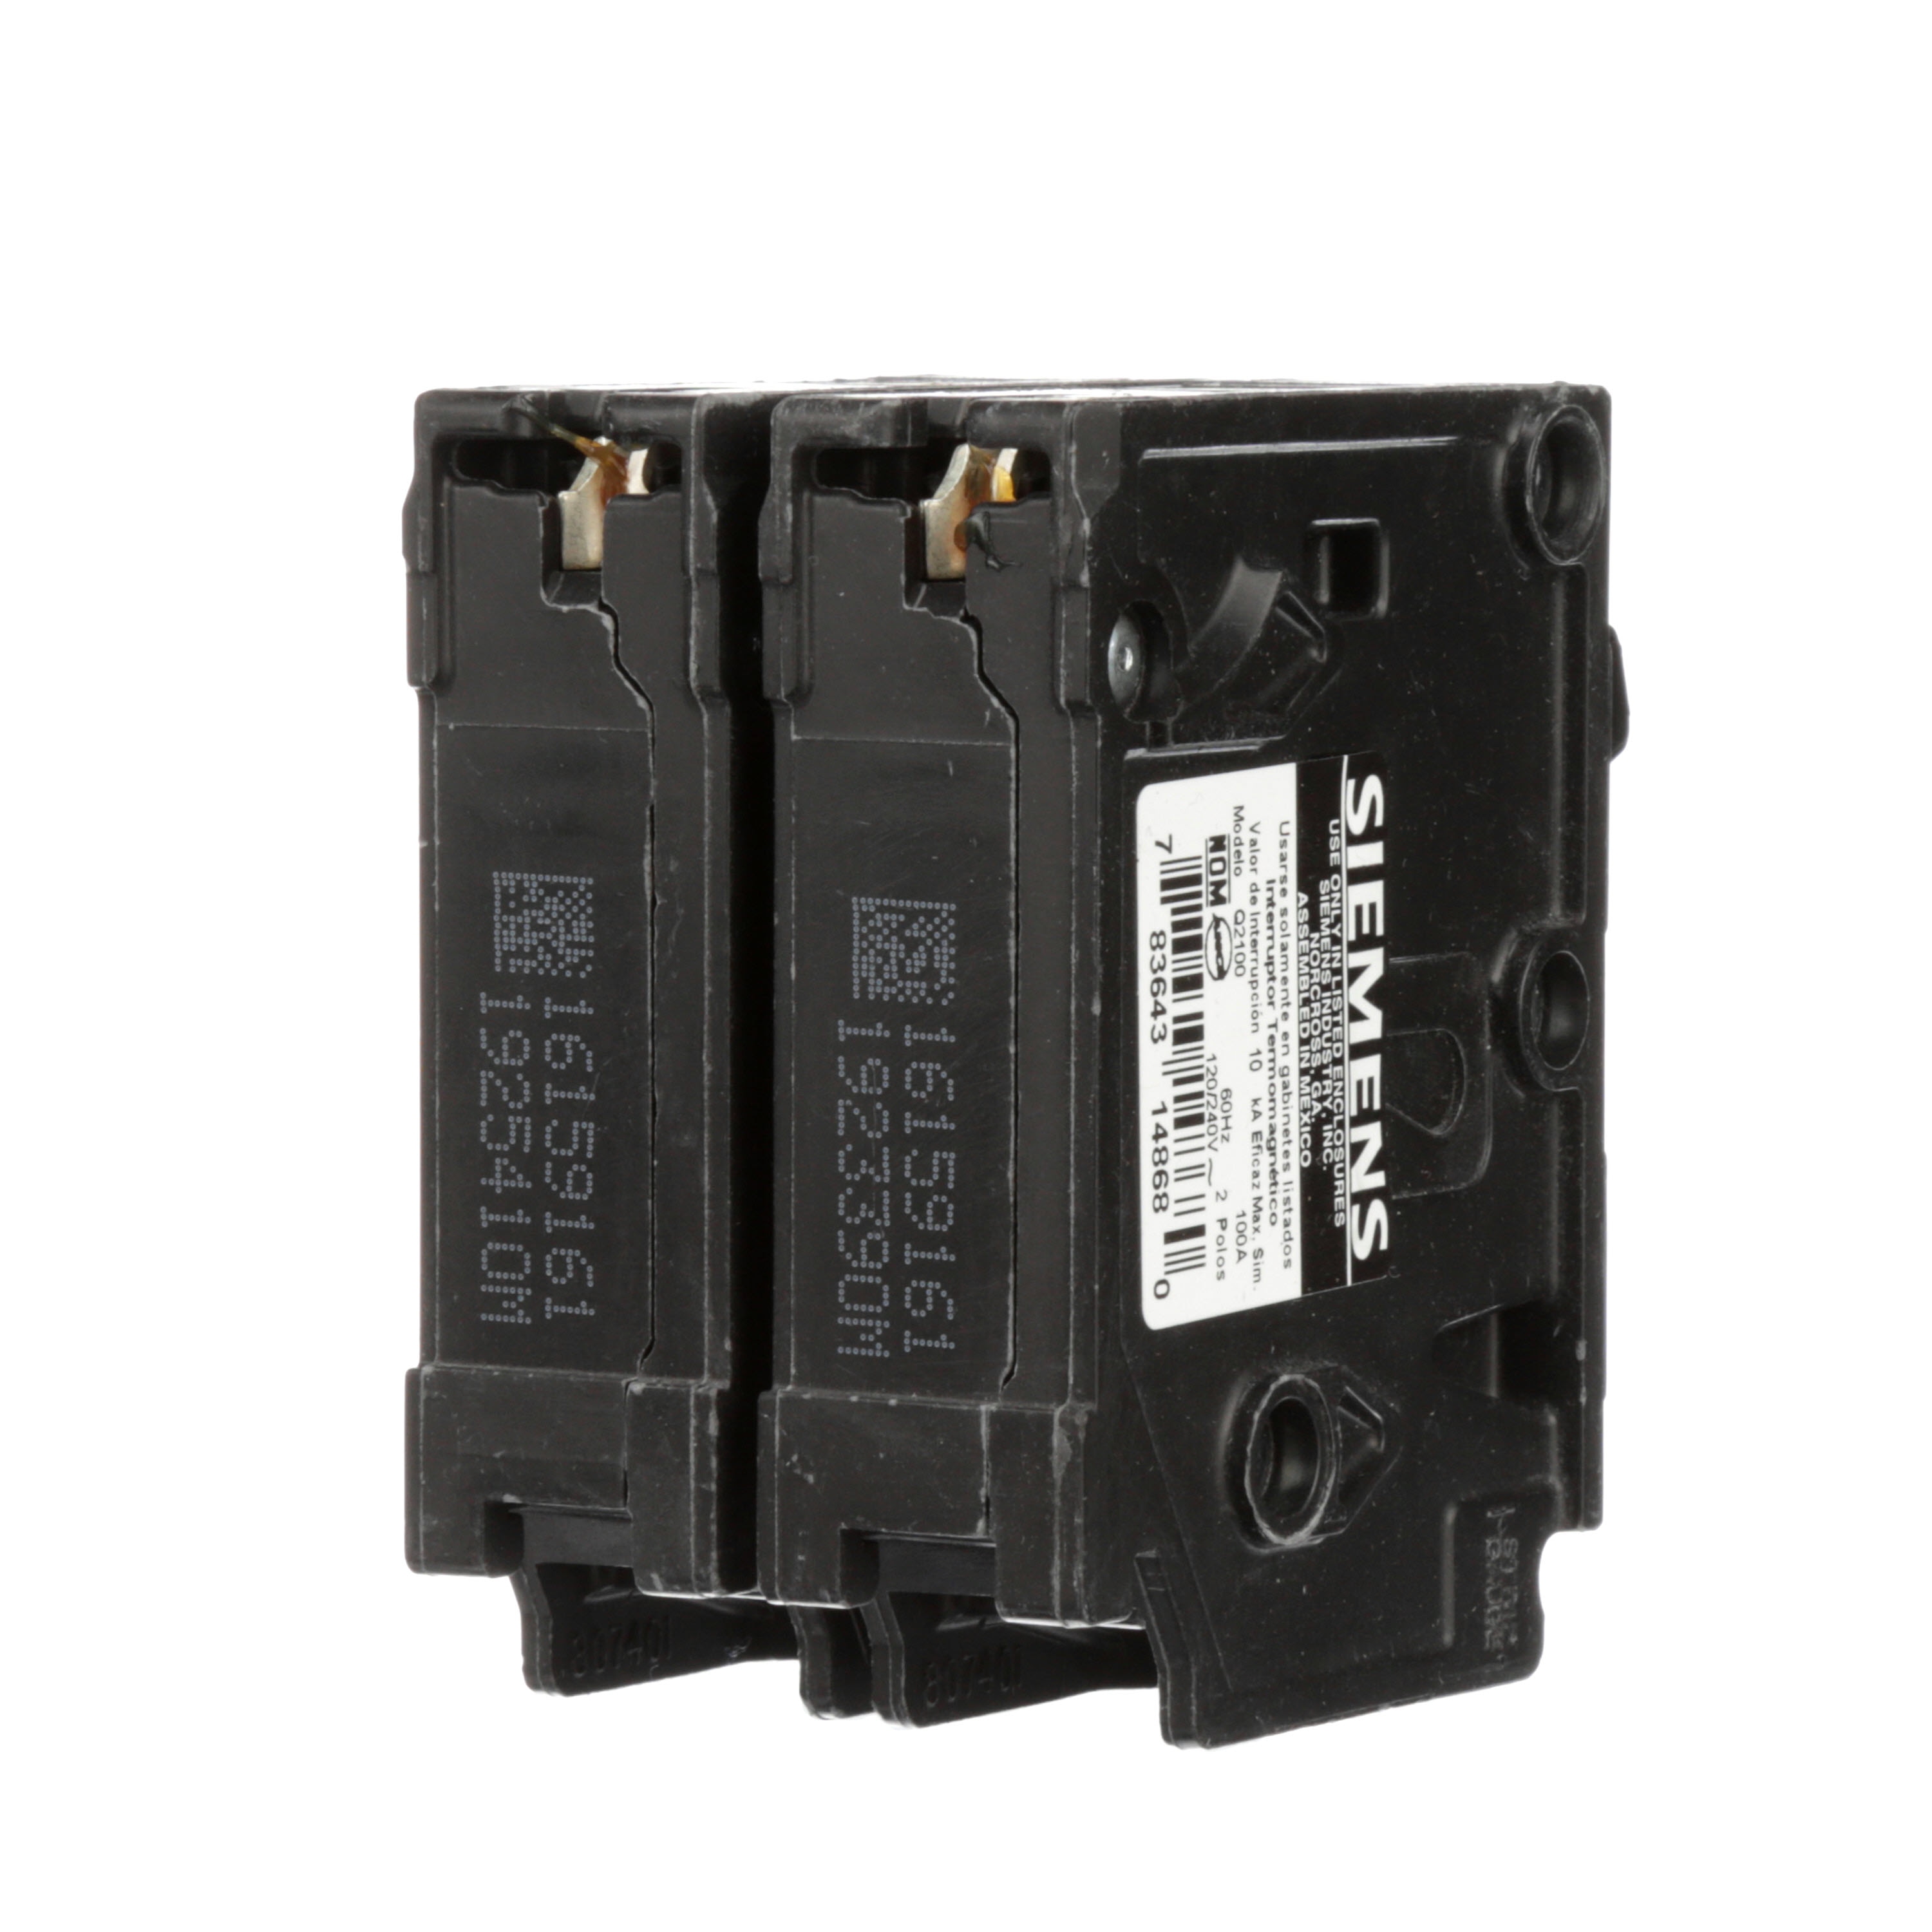 Siemens Q2100 2p 100a 120/240v Circuit Breaker NEW 1yr Warranty 